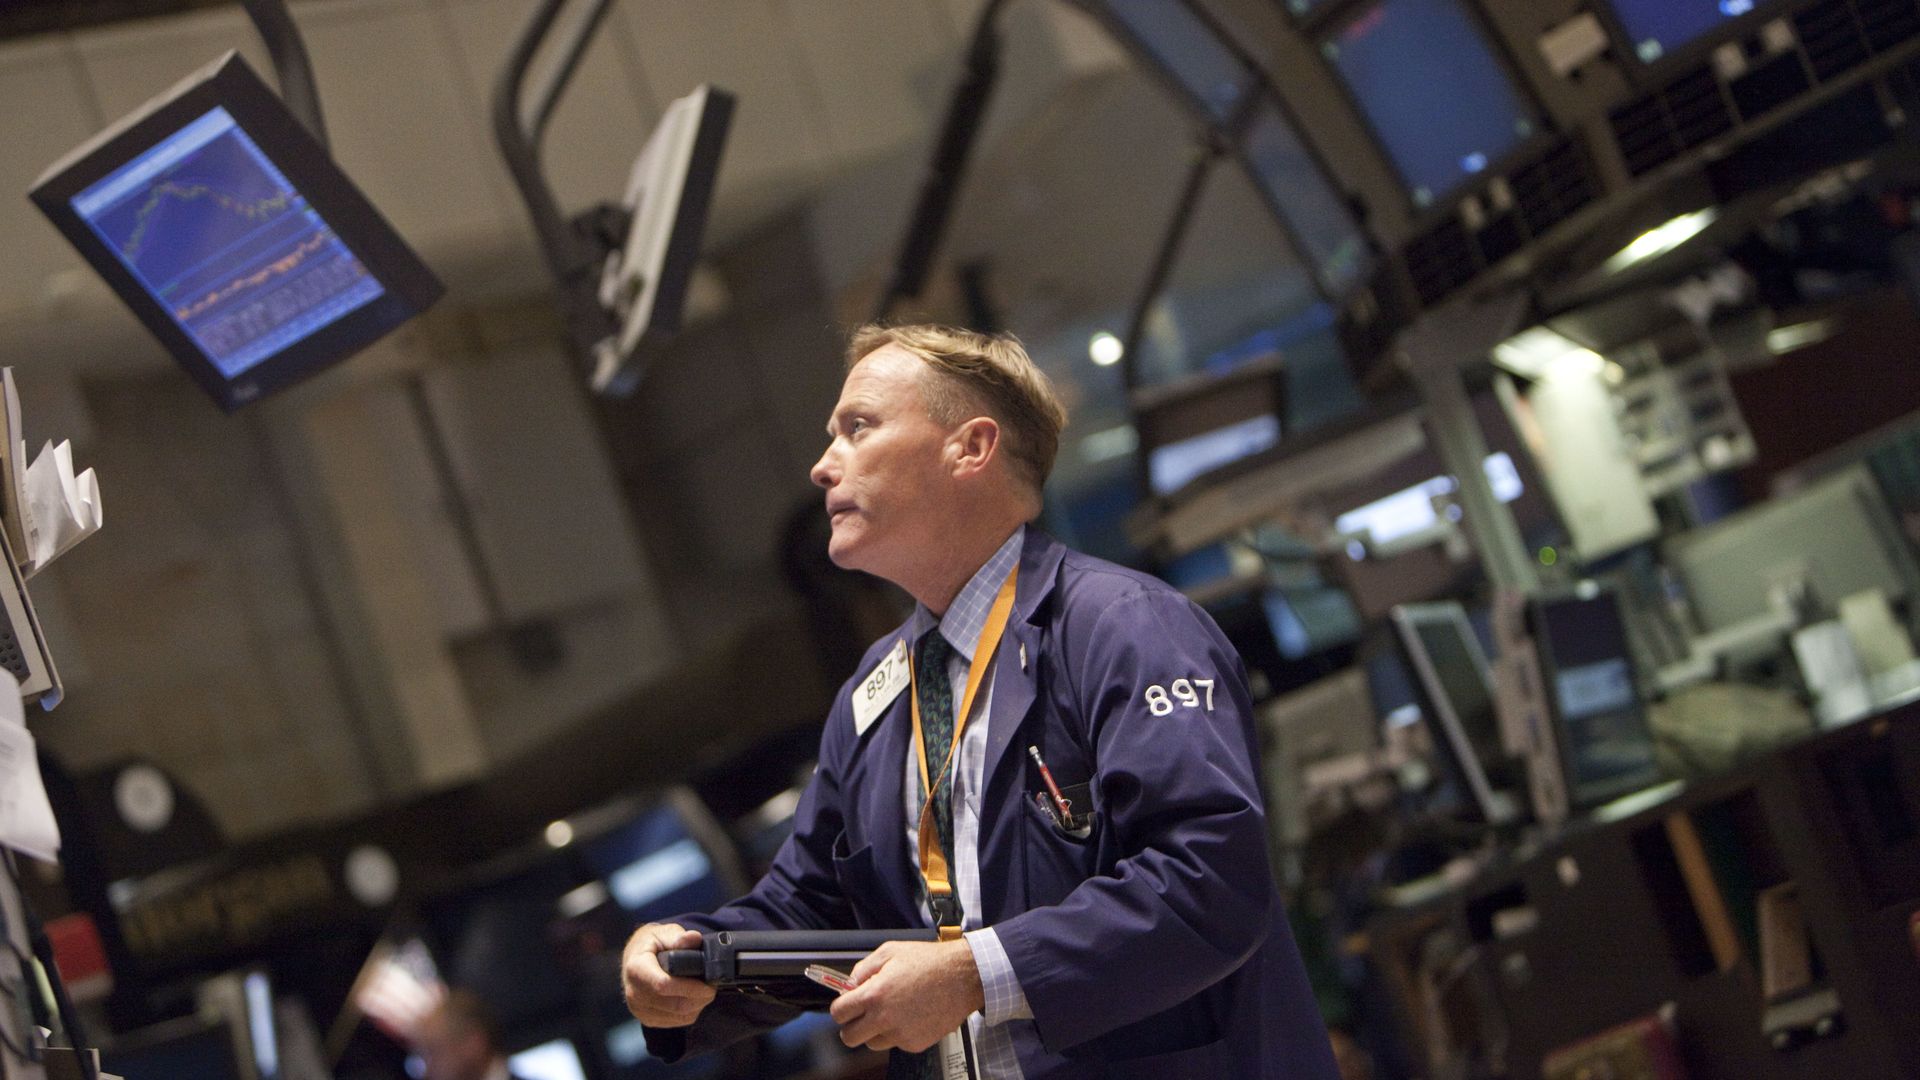 Trader on NYSE looks at monitor.